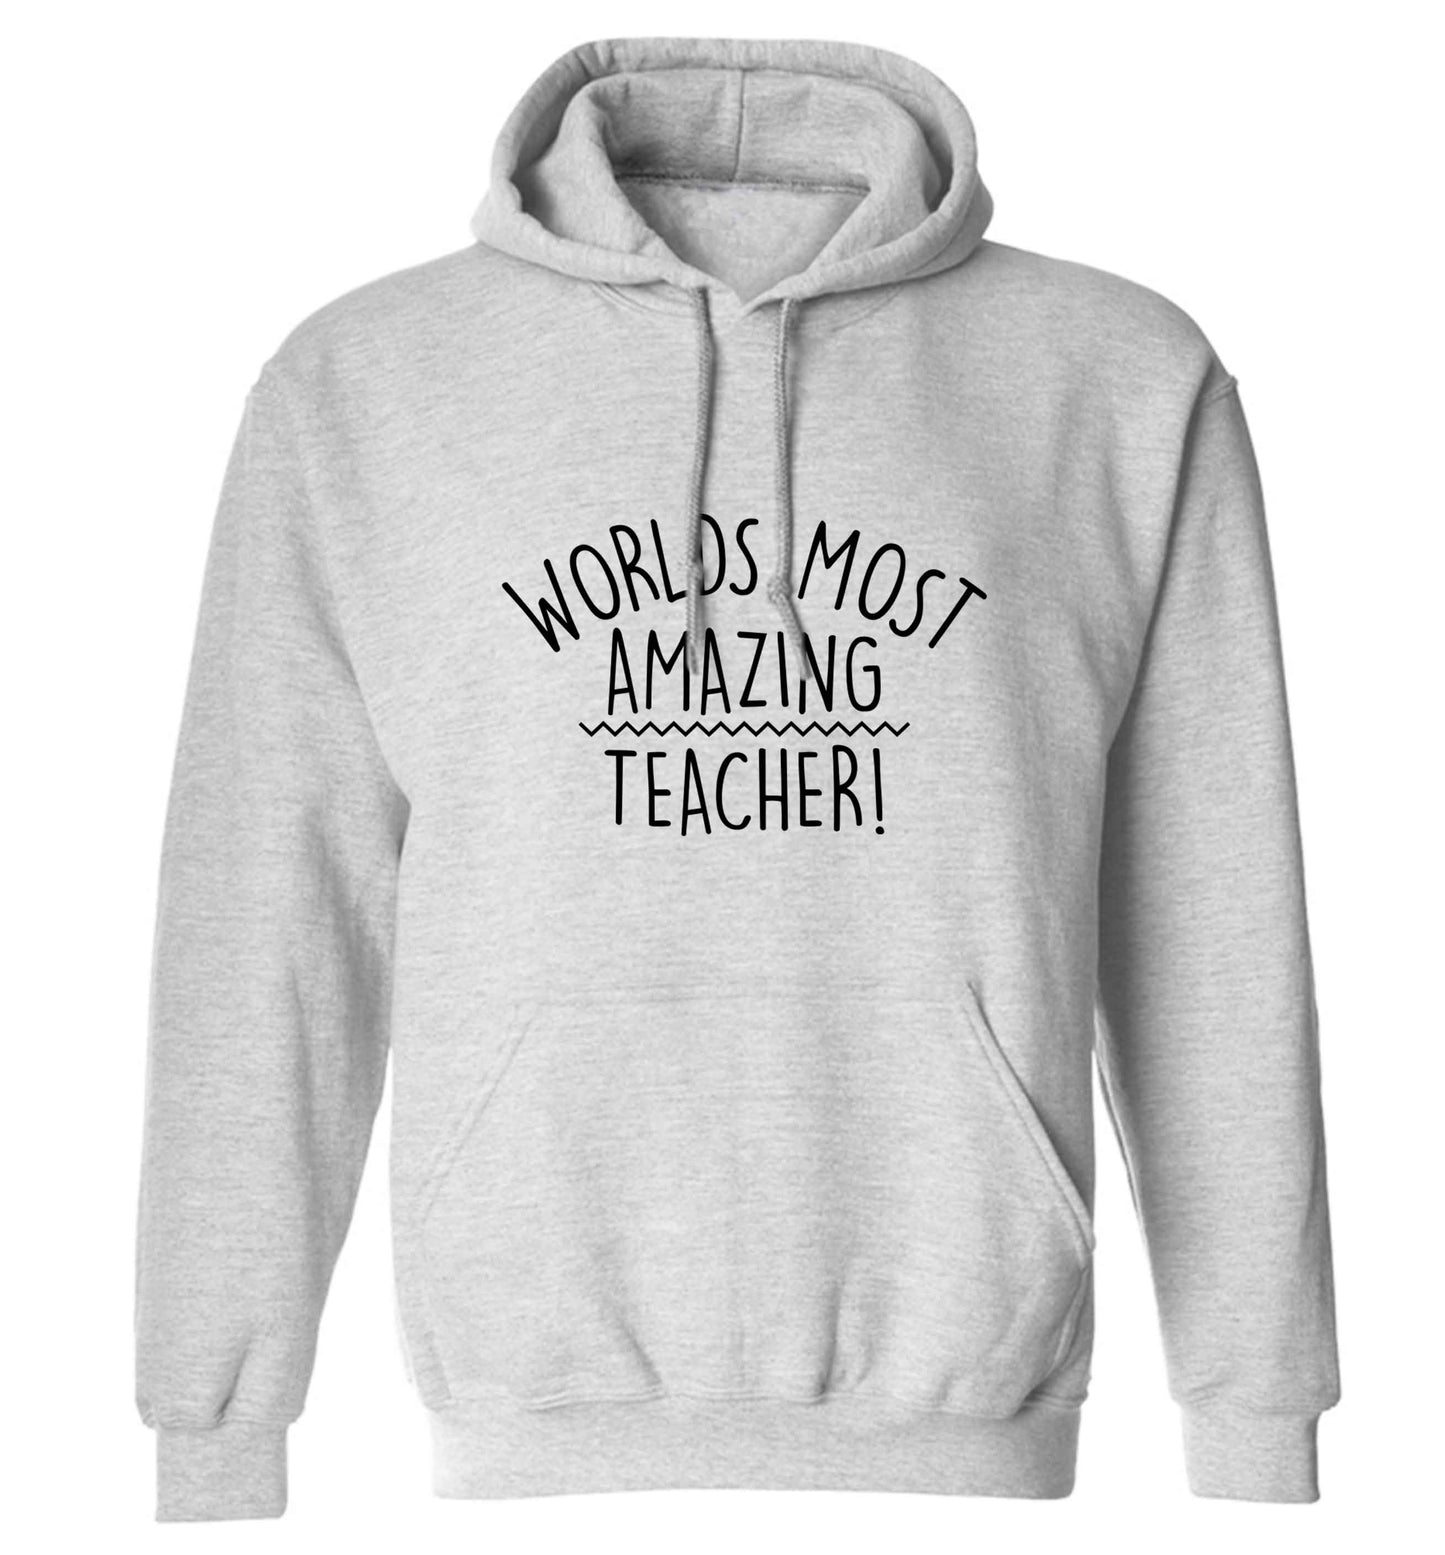 Worlds most amazing teacher adults unisex grey hoodie 2XL